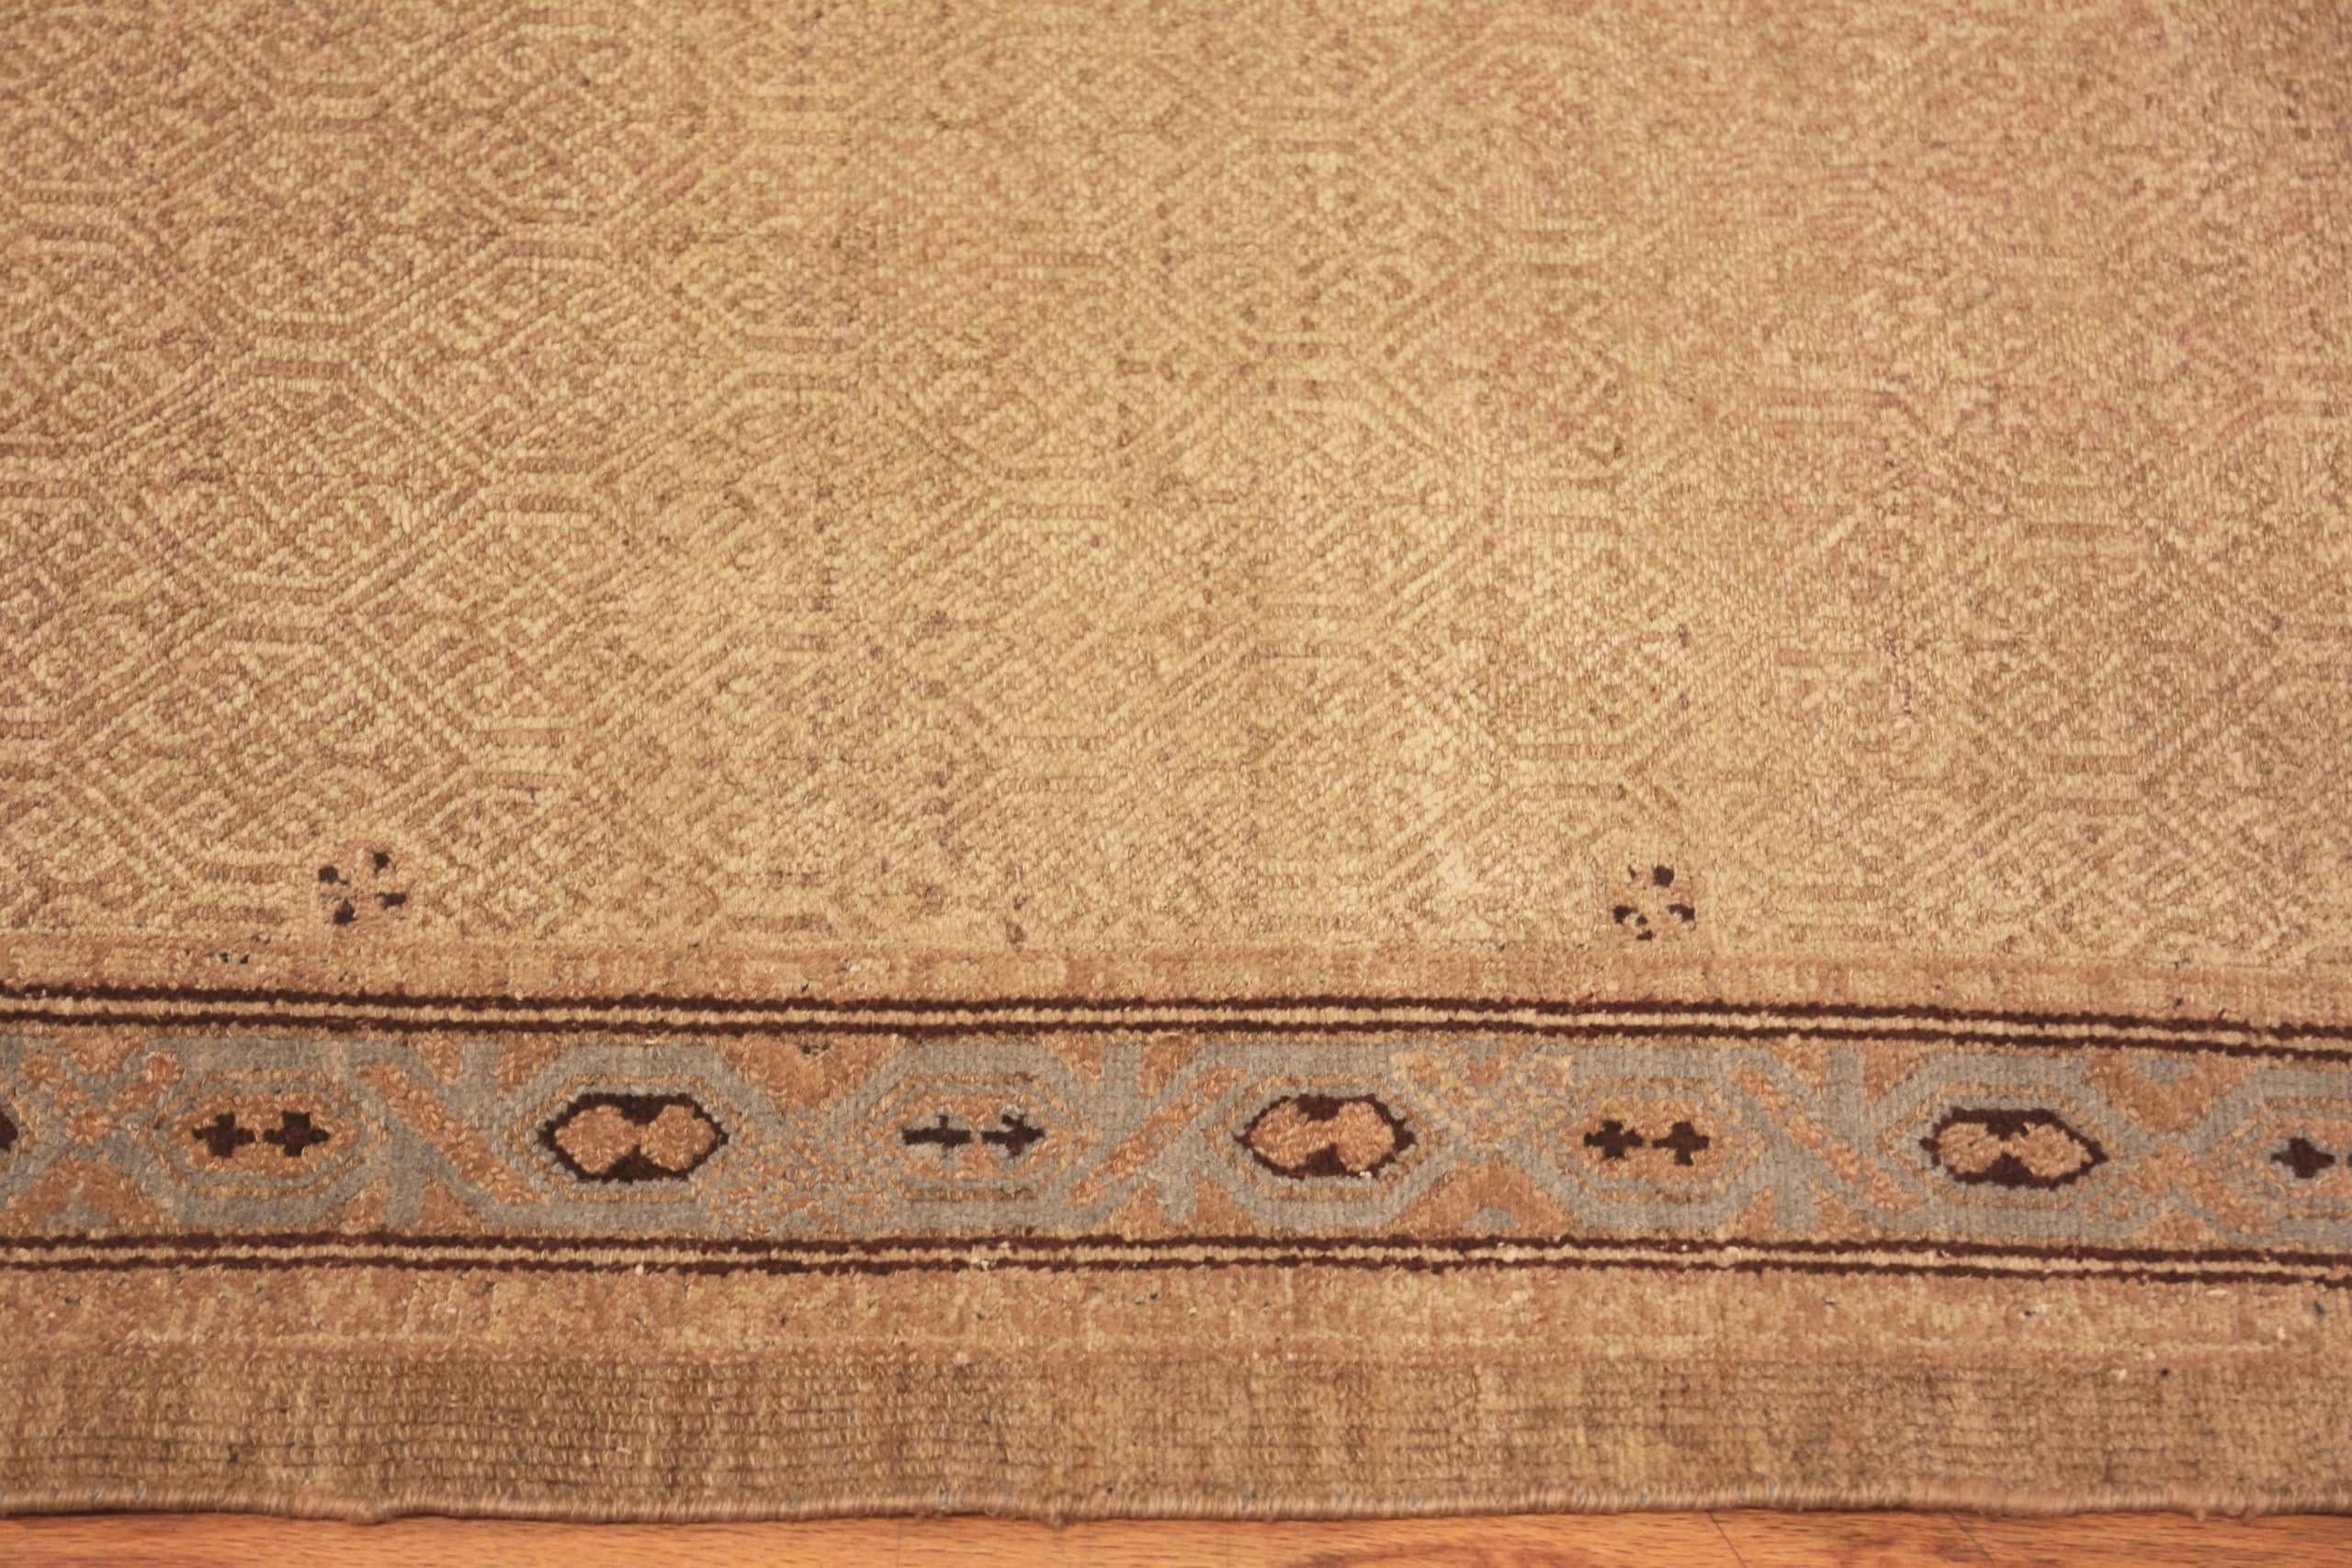 Antique Persian Serab Runner Rug, Country of origin / rug type: Persian rug, Circa date: 1900. Size: 3 ft 7 in x 21 ft (1.09 m x 6.4 m)

